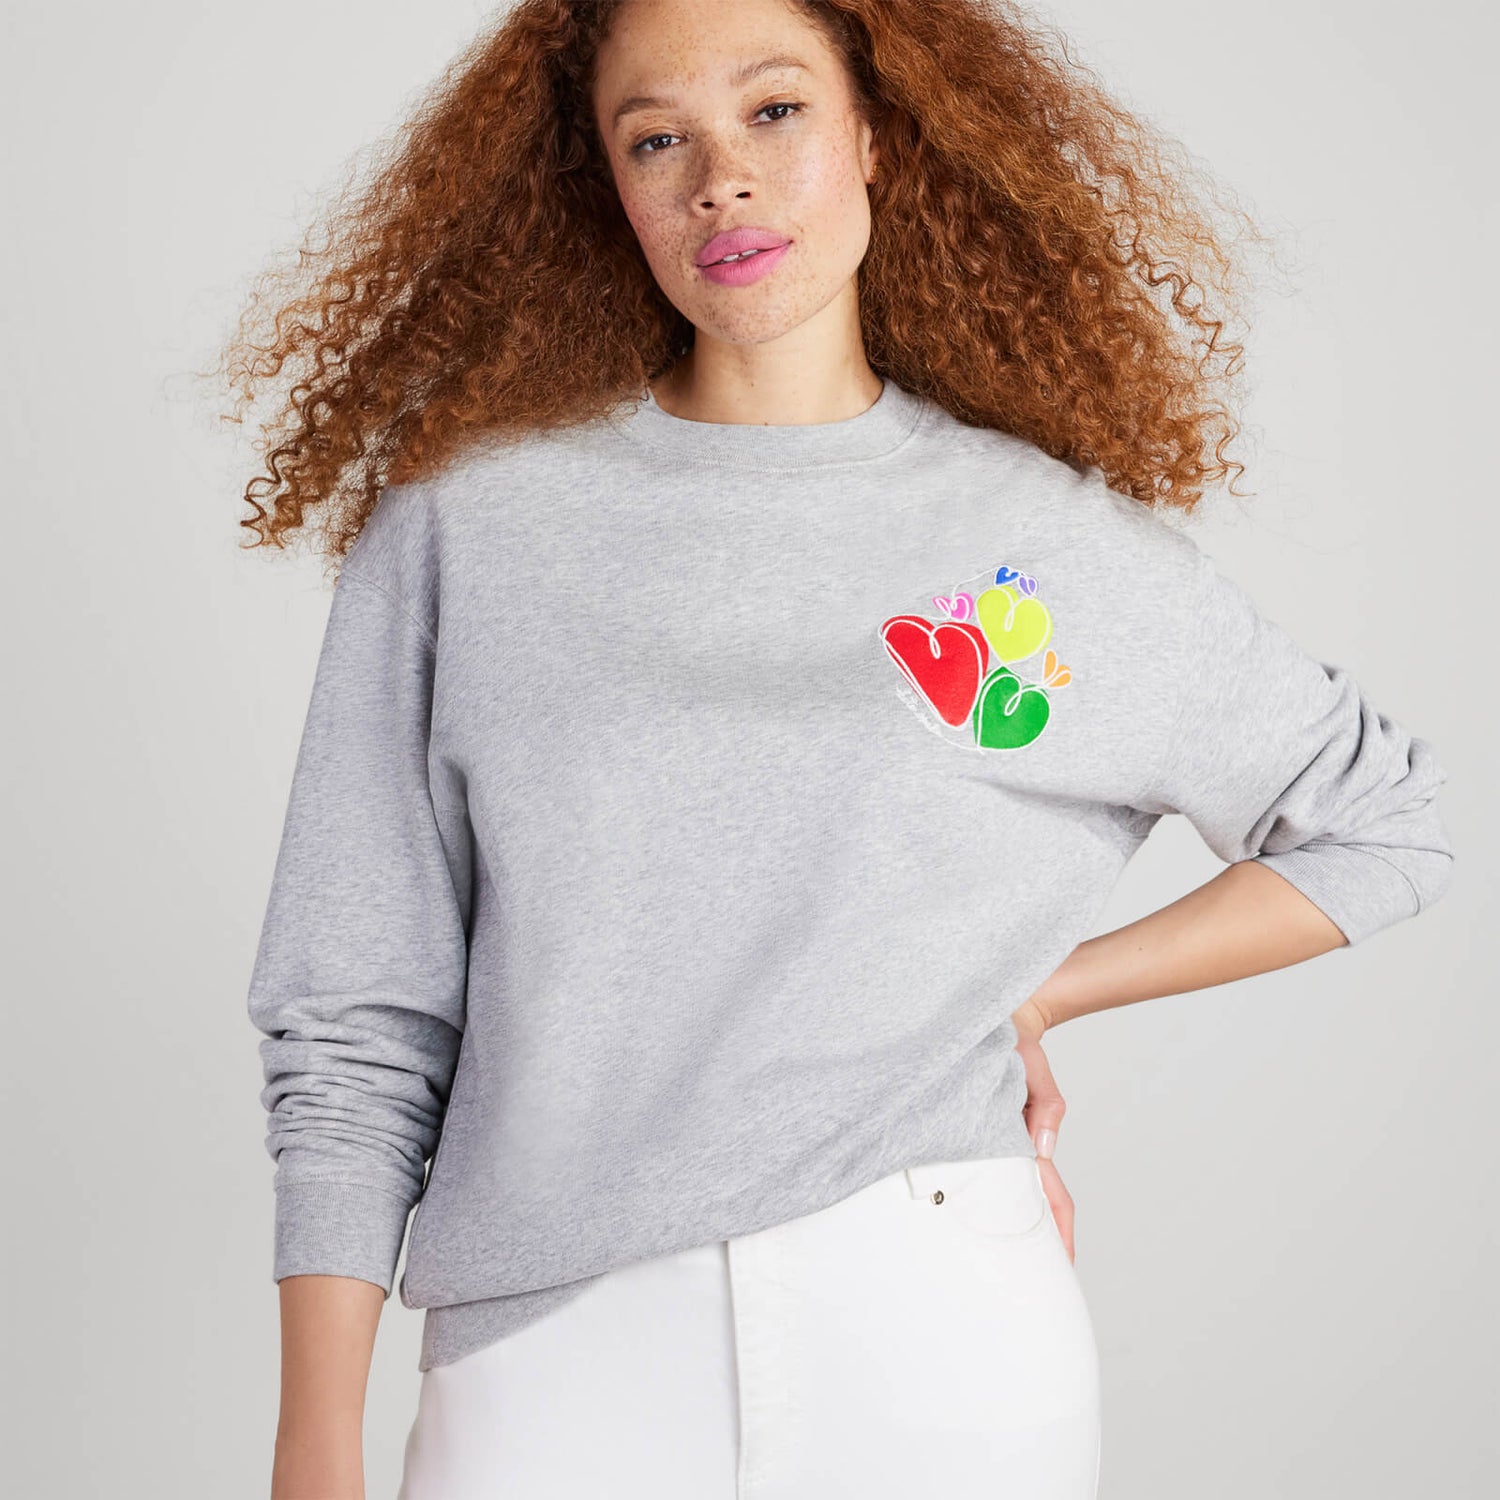 Kate Spade New York Women's Pride Hearts Sweatshirt - Grey Melange - XS